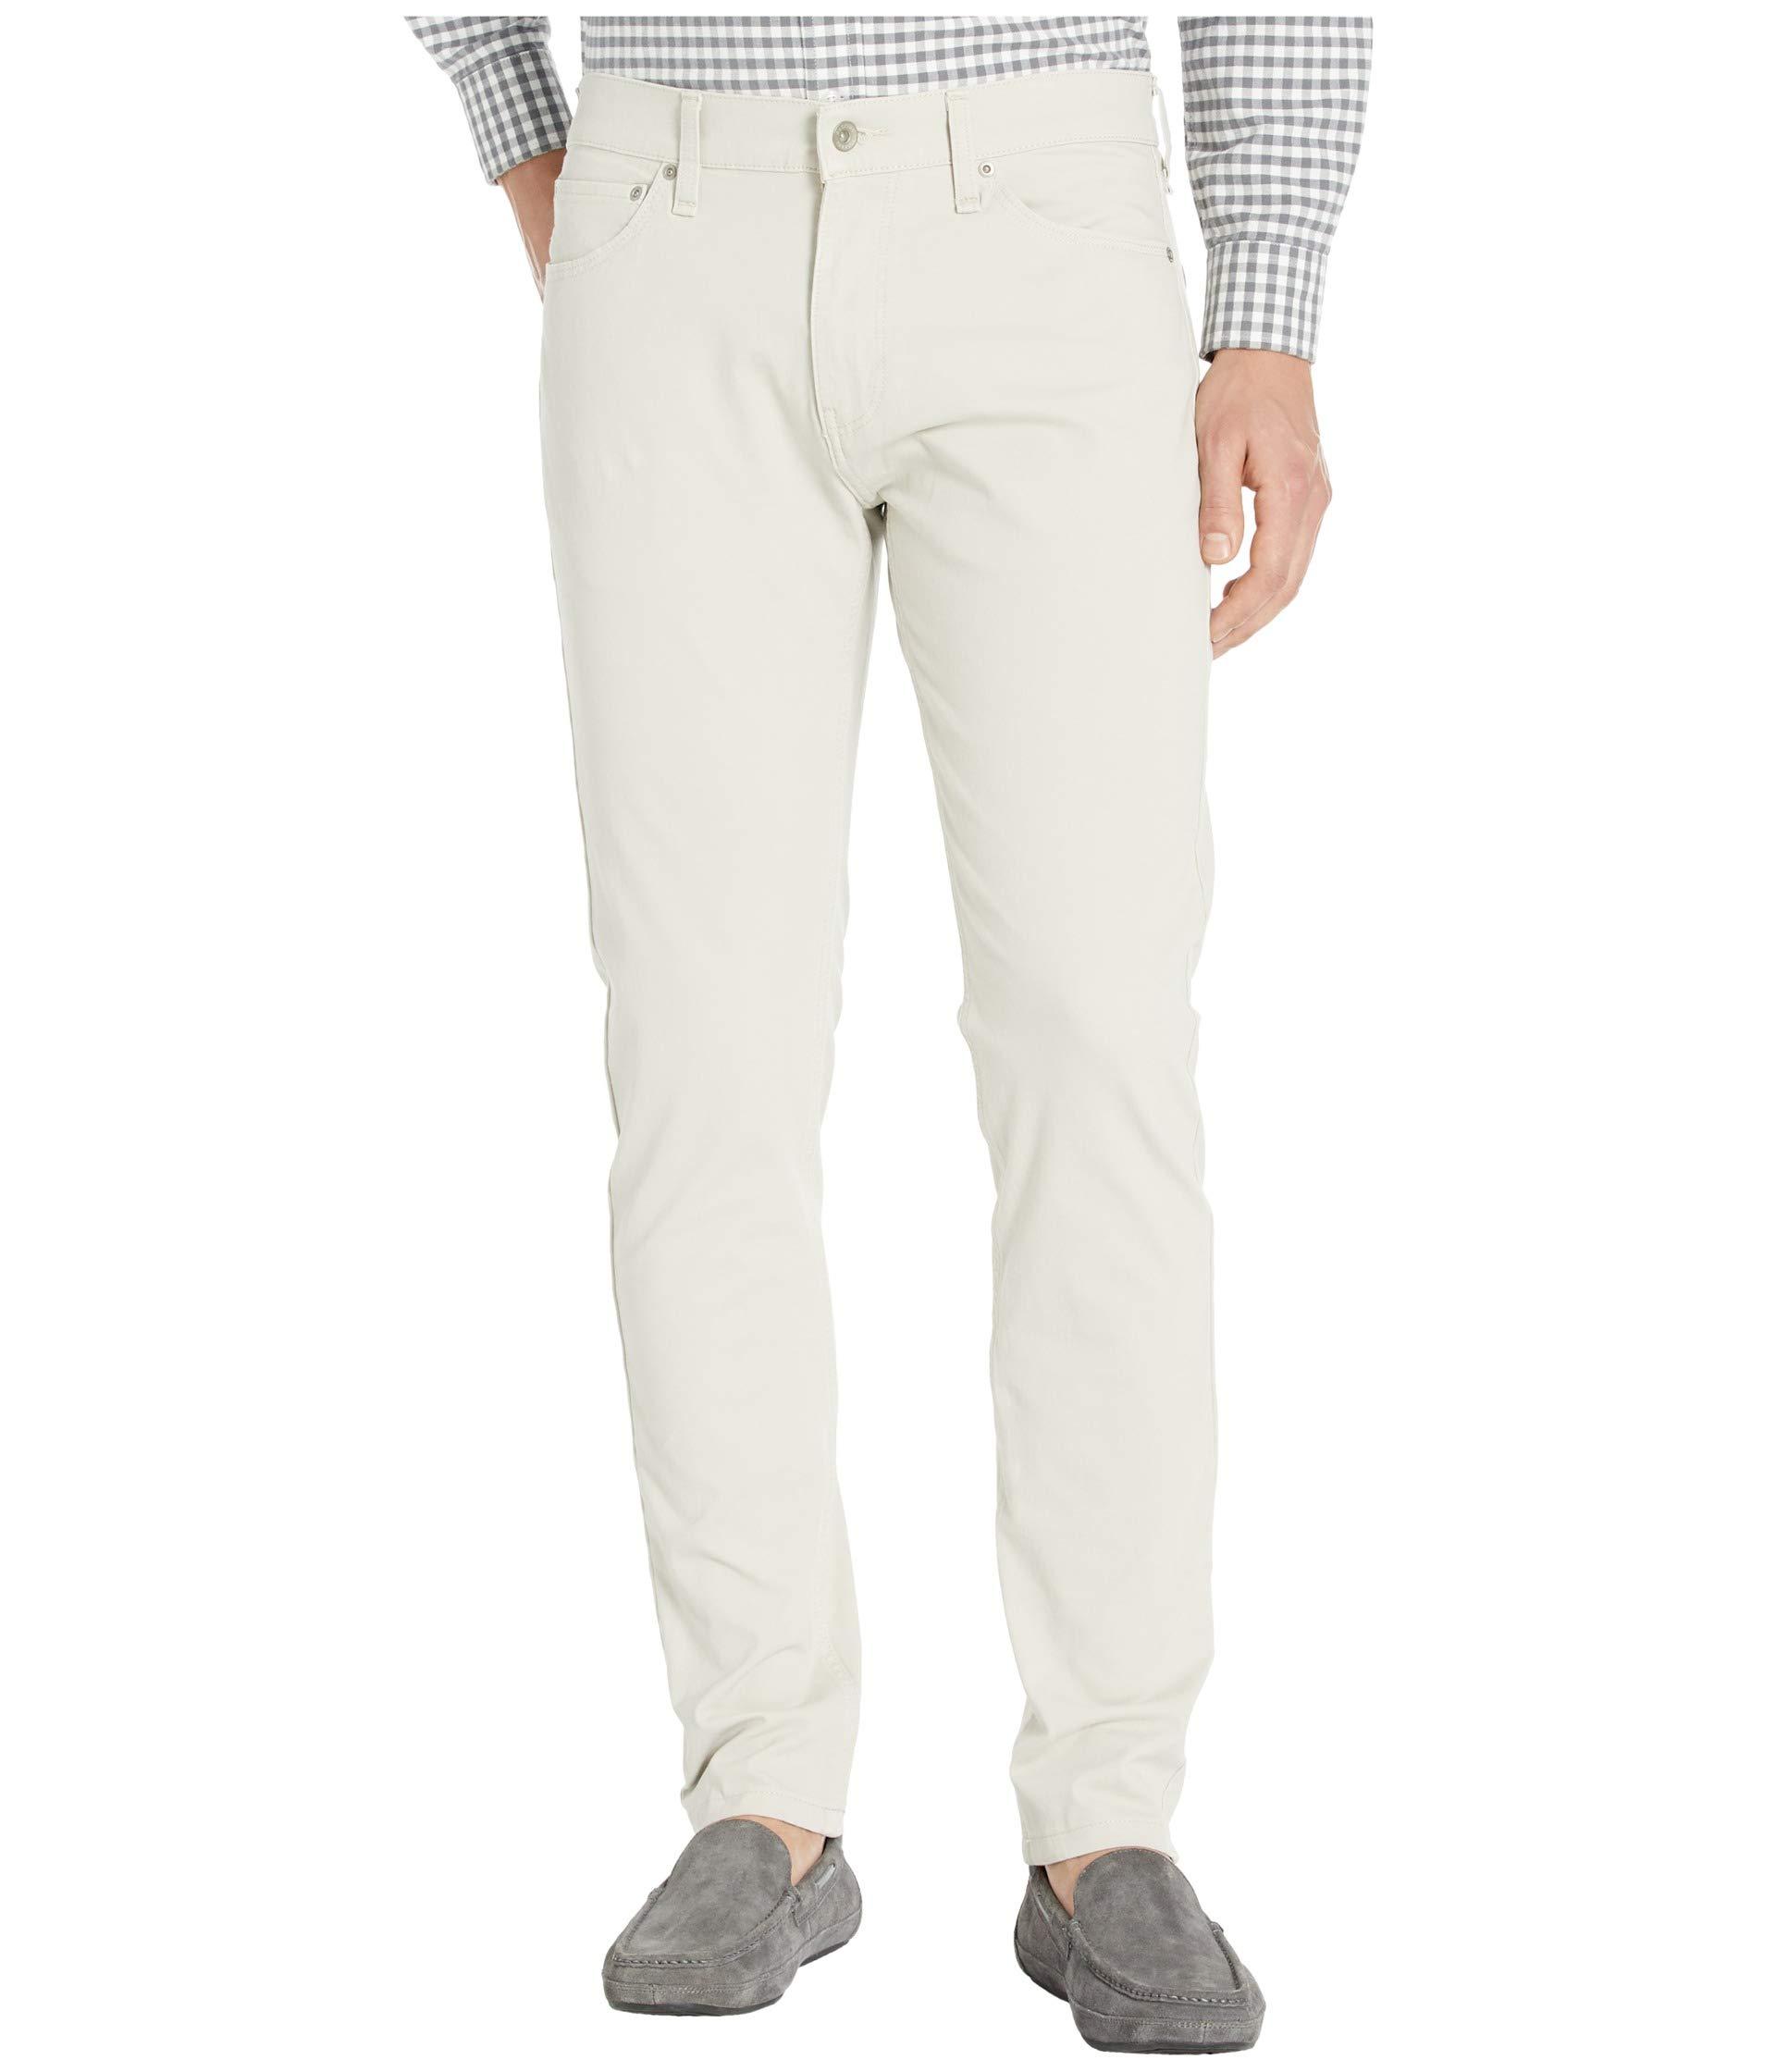 Dockers Cotton Slim Fit Jean Cut With Smart 360 Flex in Gray for Men - Lyst